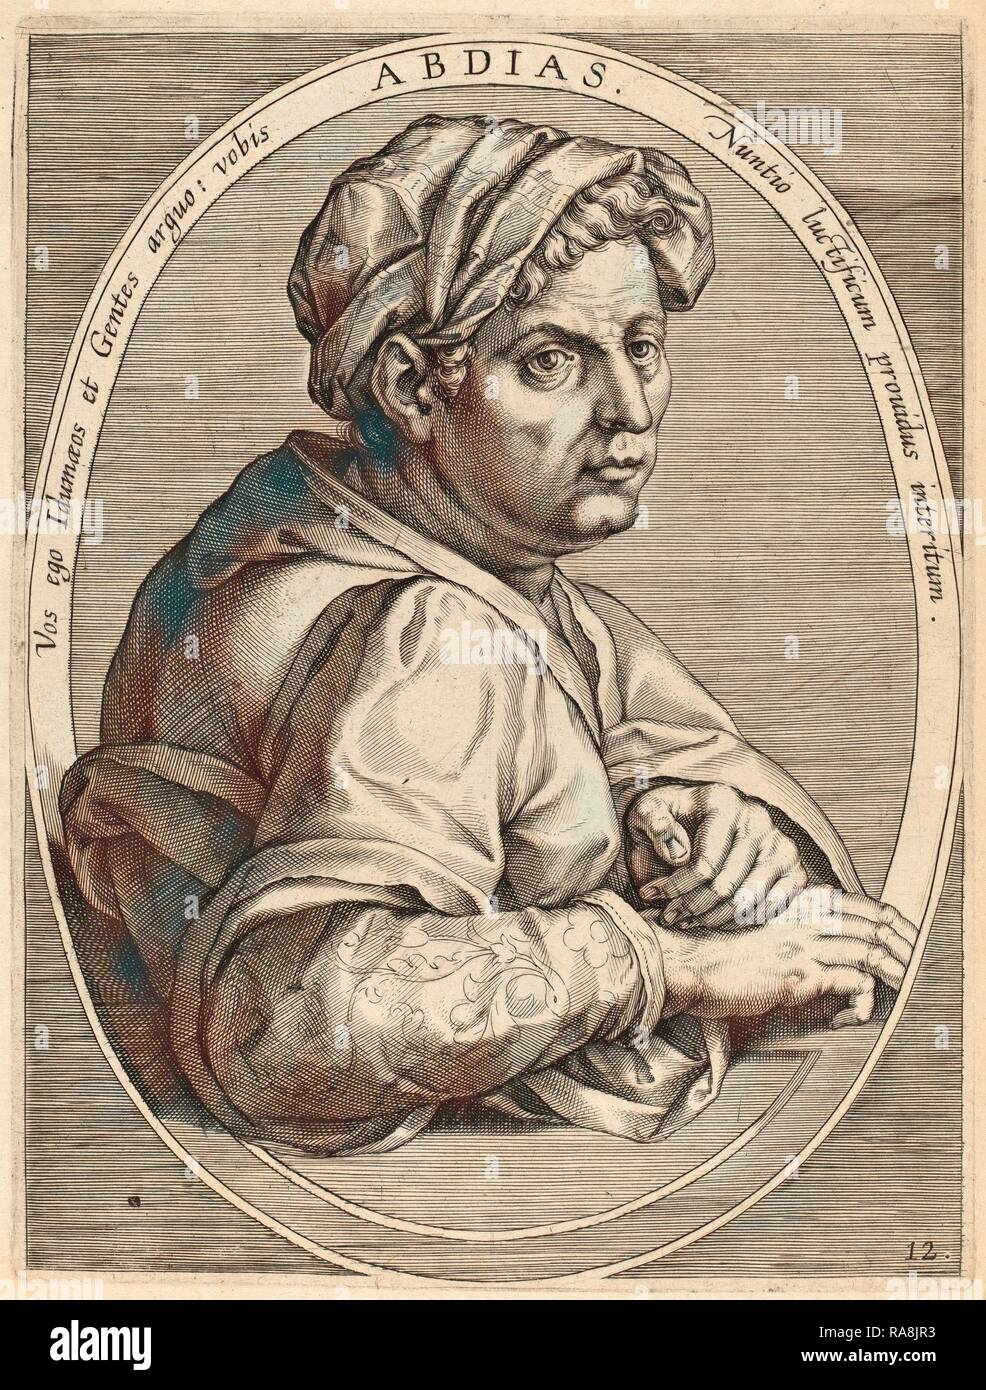 Theodor Galle after Jan van der Straet (Flemish, c. 1571 - 1633), Abdias, published 1613, engraving on laid paper reimagined Stock Photo